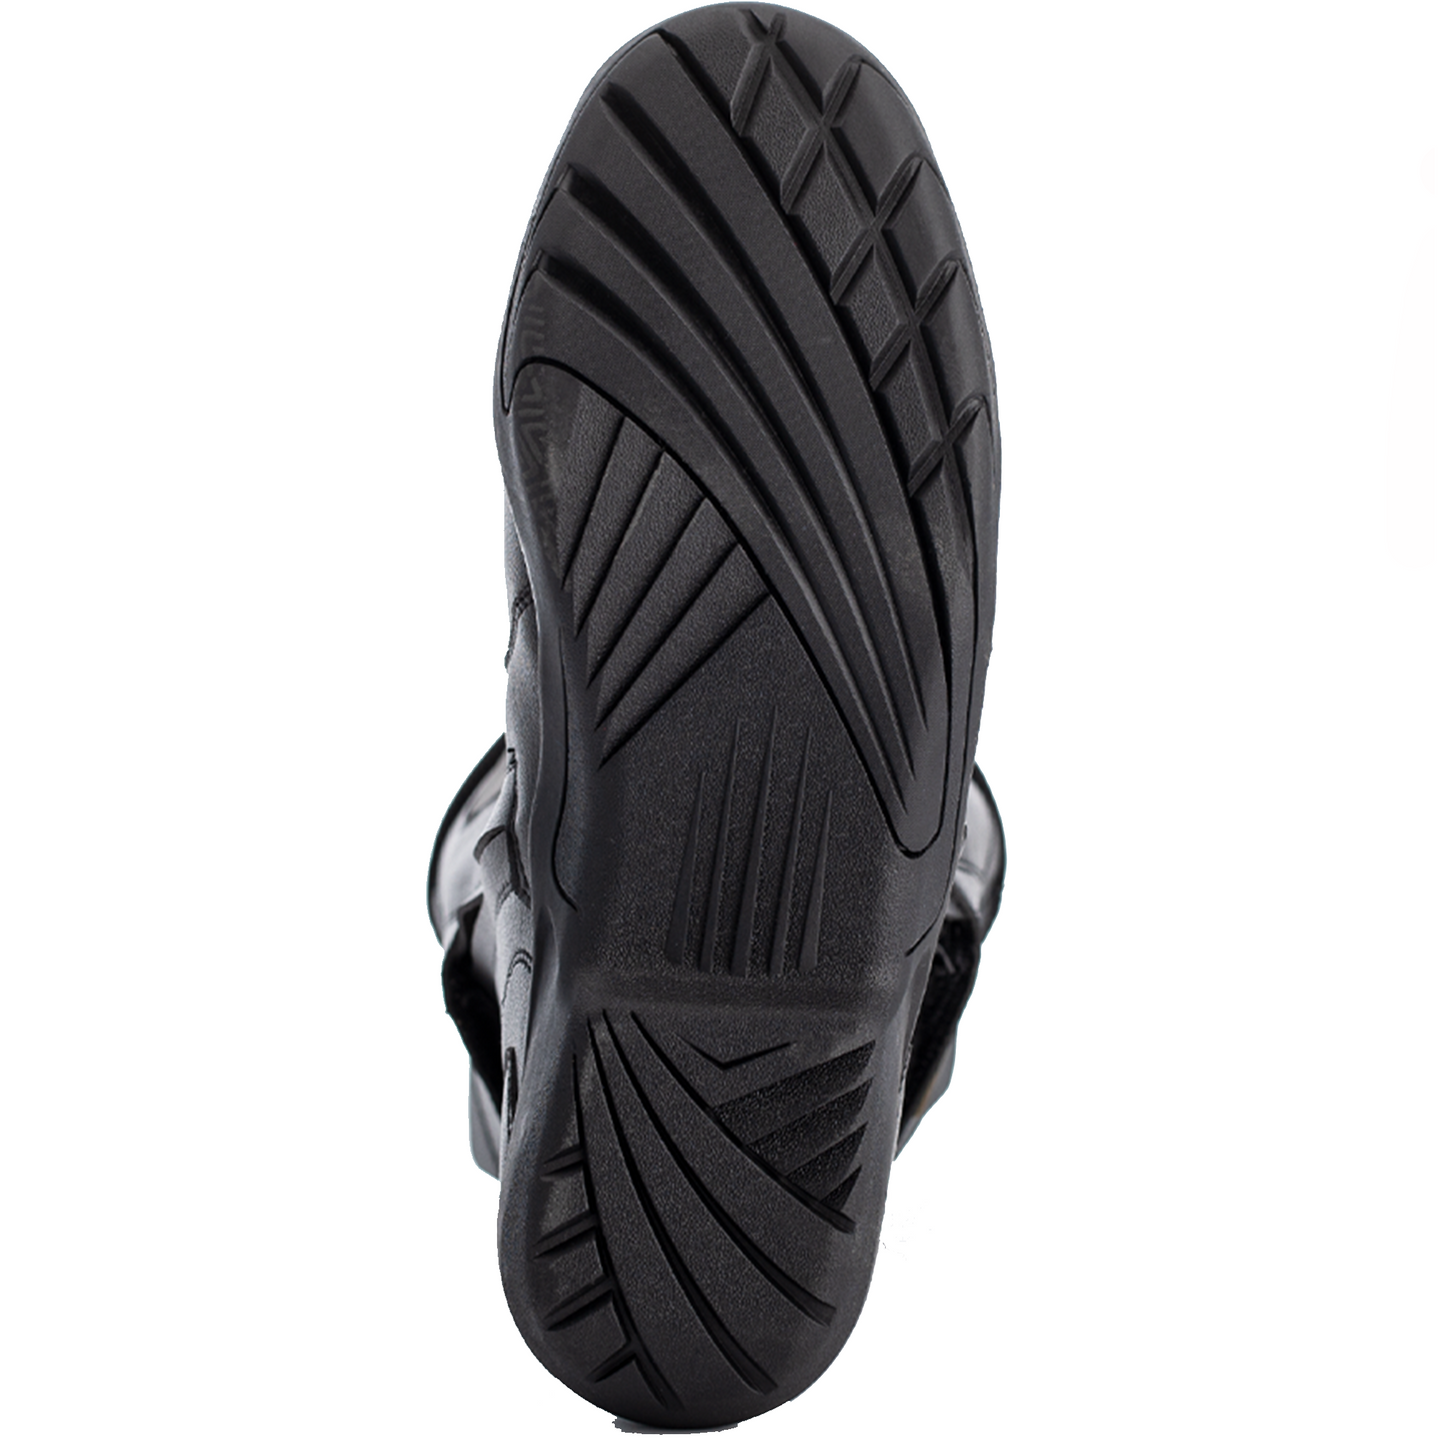 RST Pathfinder (CE) Waterproof Boots (2748) Black